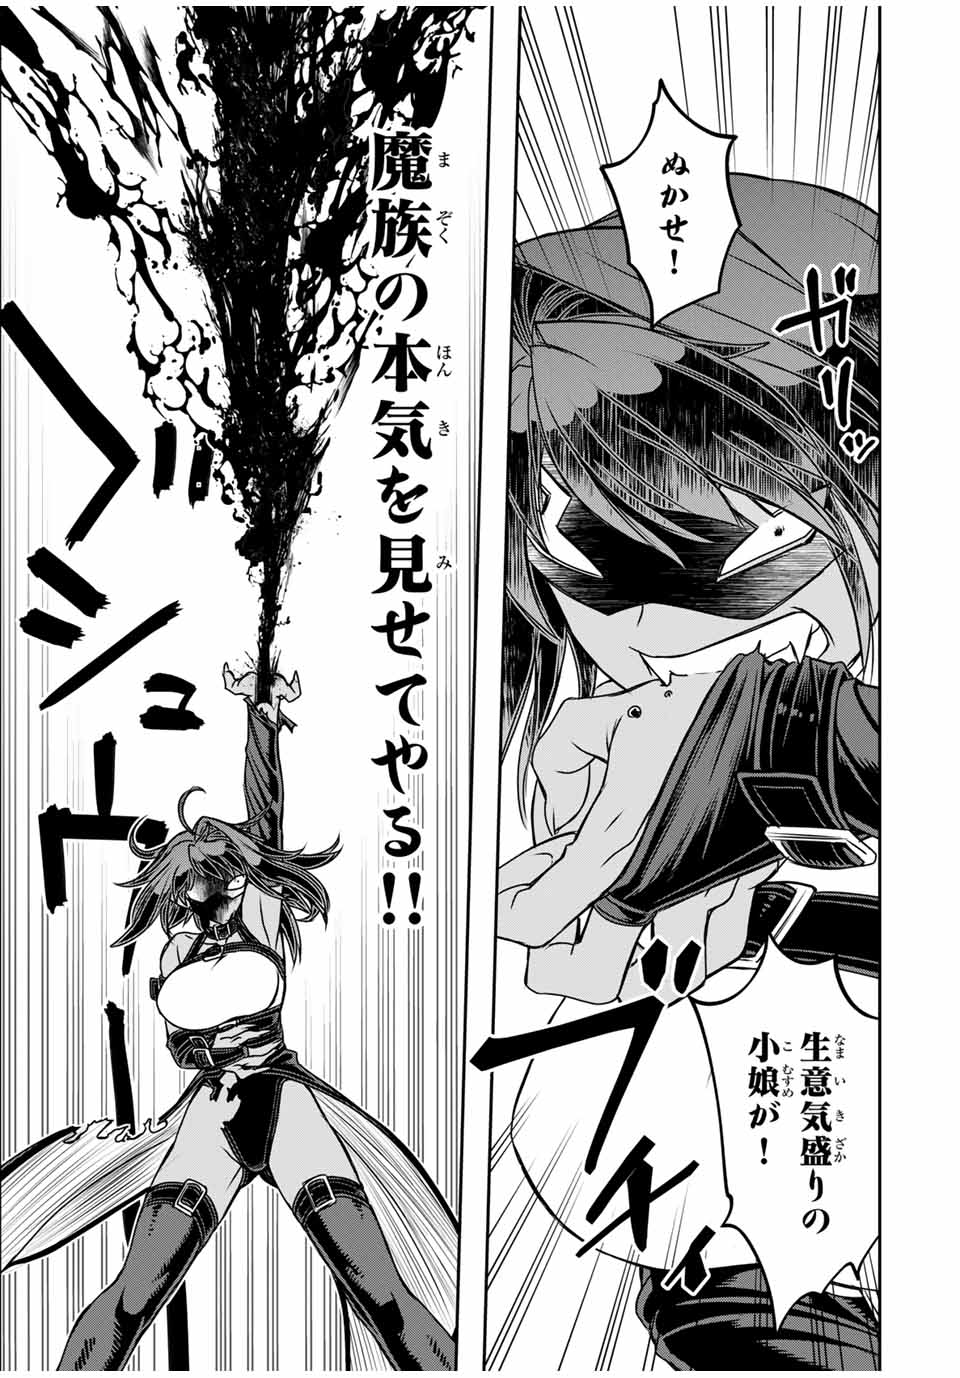 Nengan no Akuyaku Reijou (Last Boss) no Karada wo Teniiretazo!  - Chapter 27 - Page 3